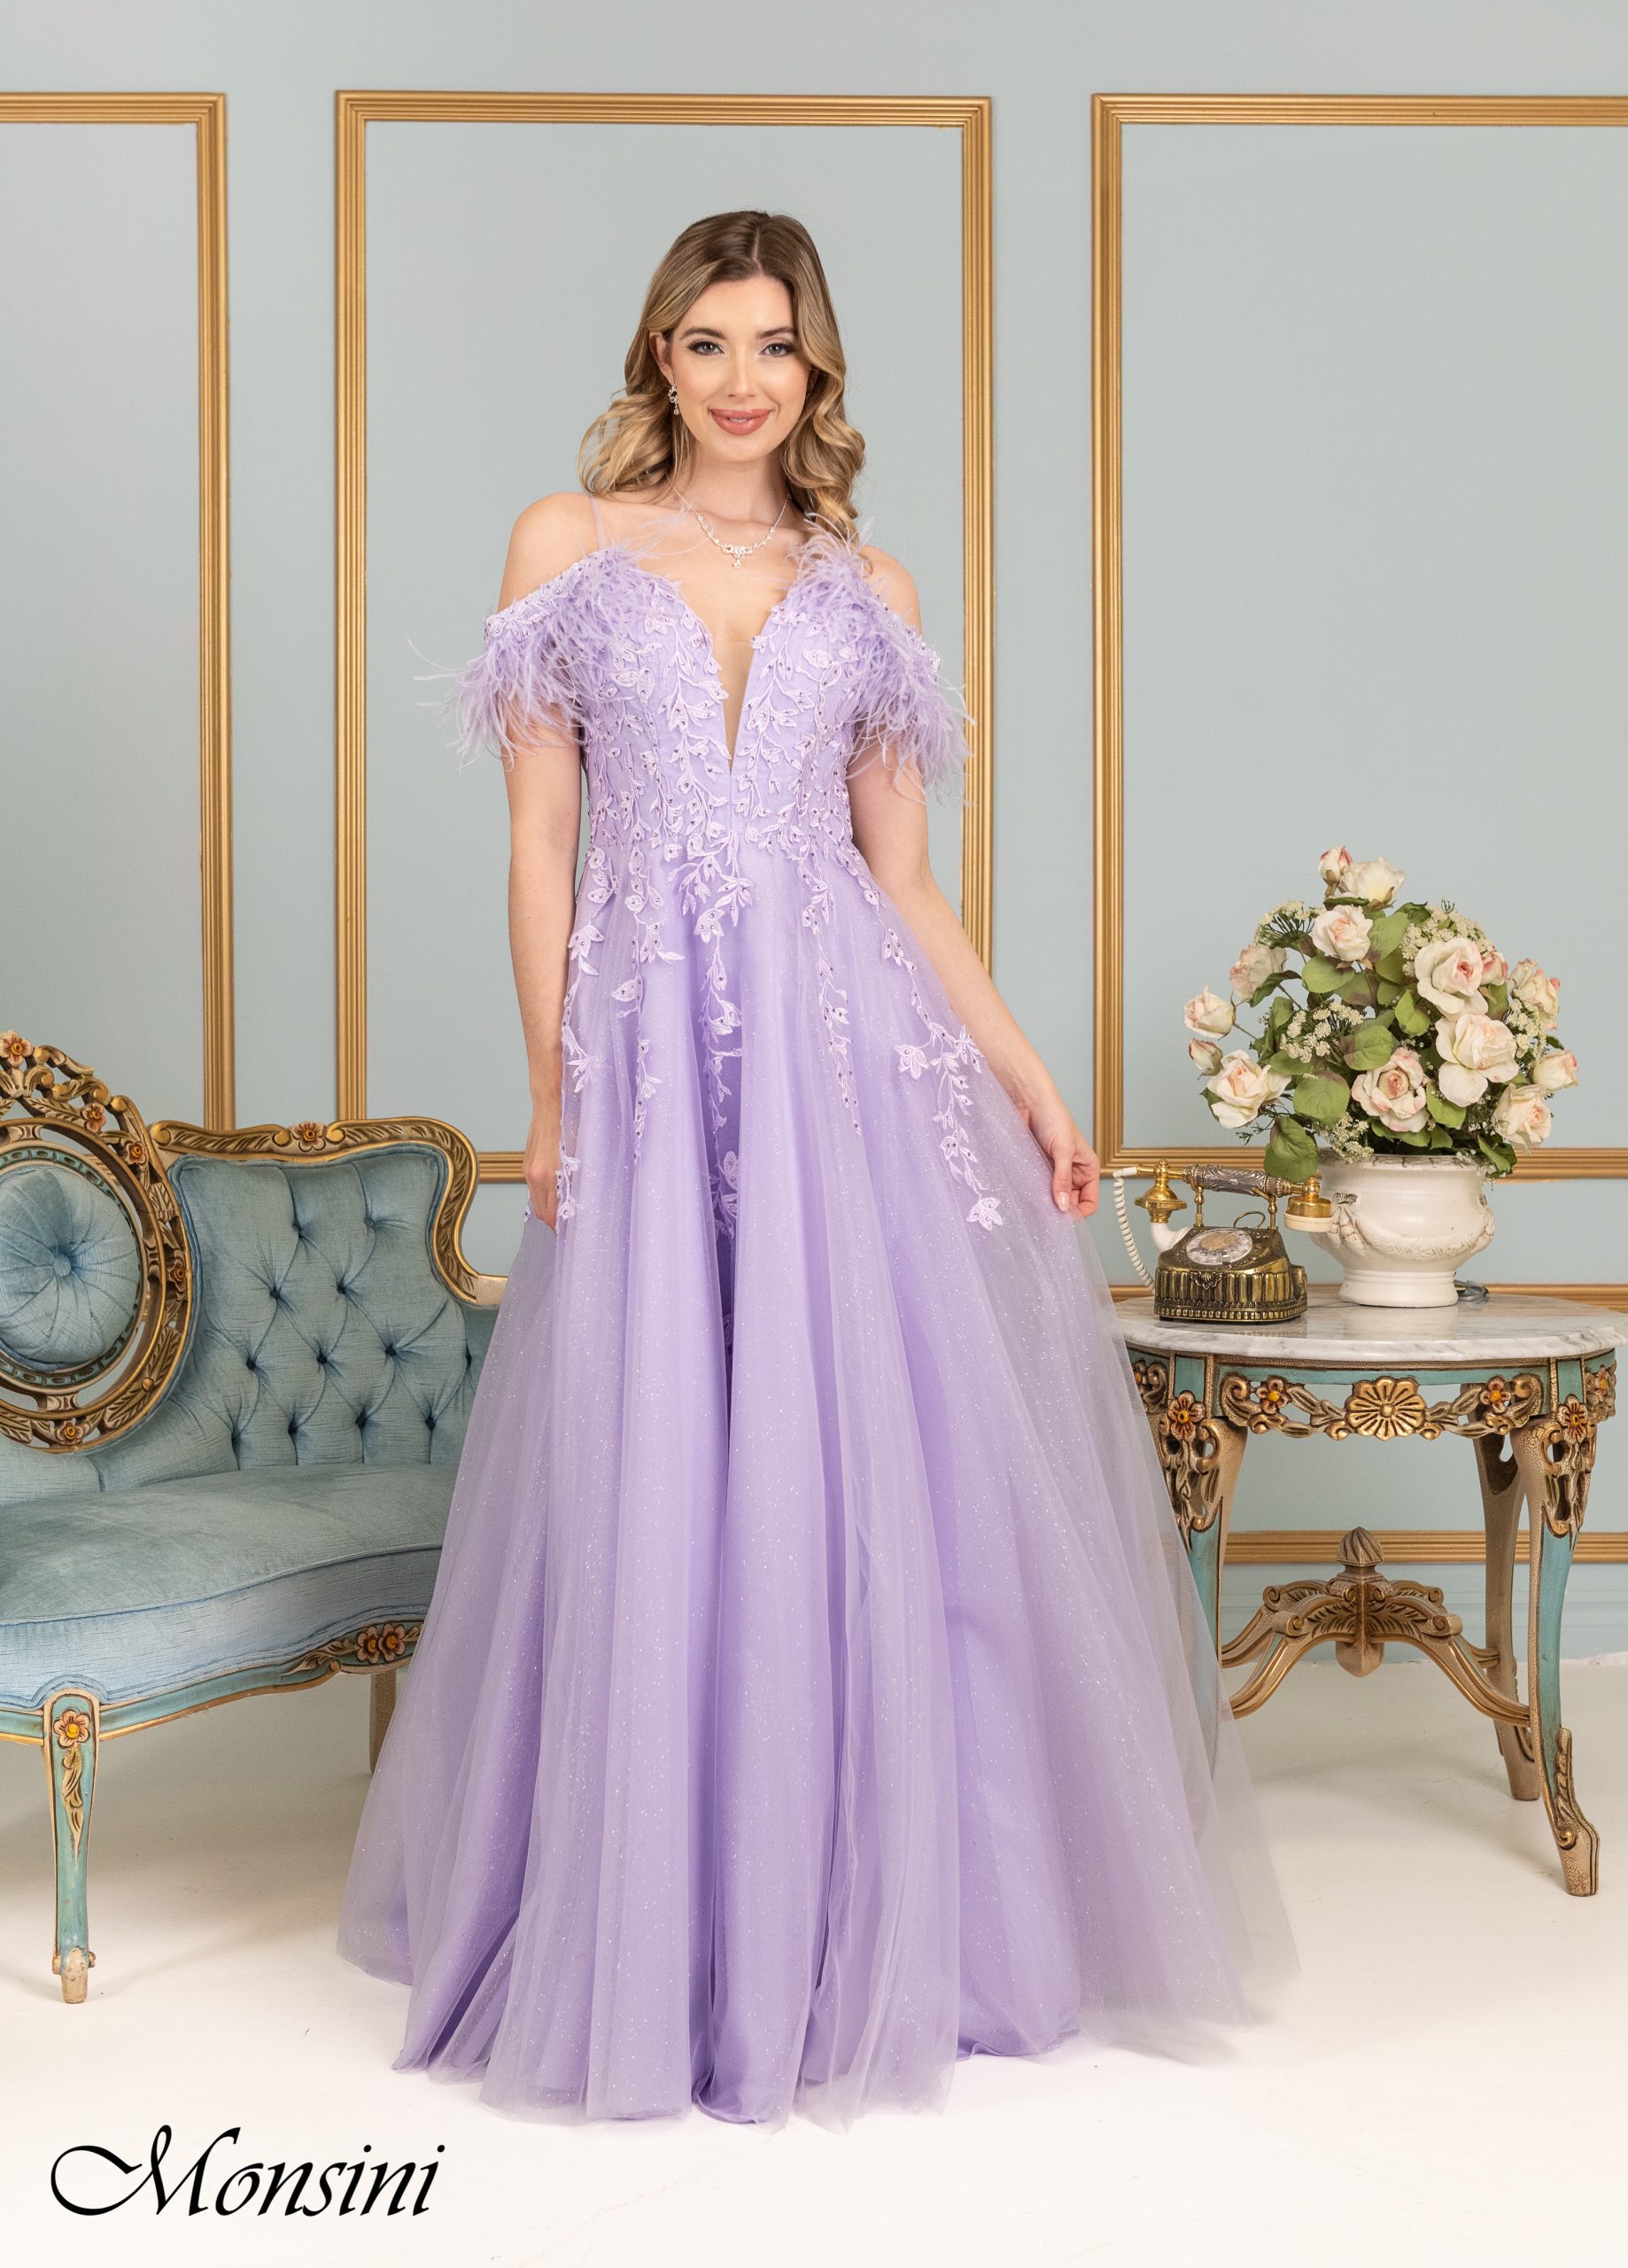 31912 - Monsini Prom Dresses available at Lisa's Bridal